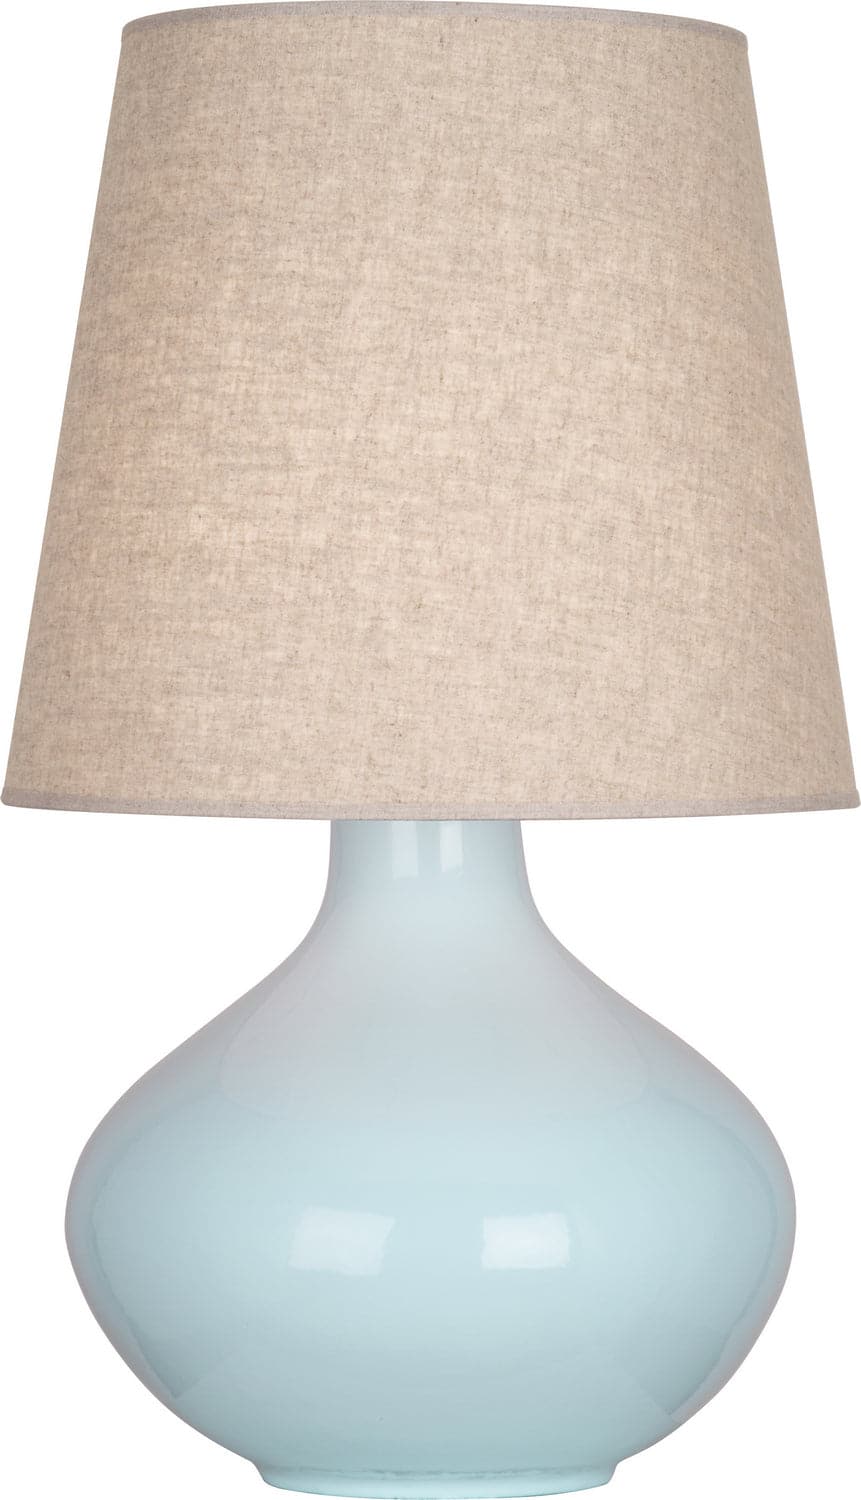 Robert Abbey - BB991 - One Light Table Lamp - June - Babay Blue Glazed